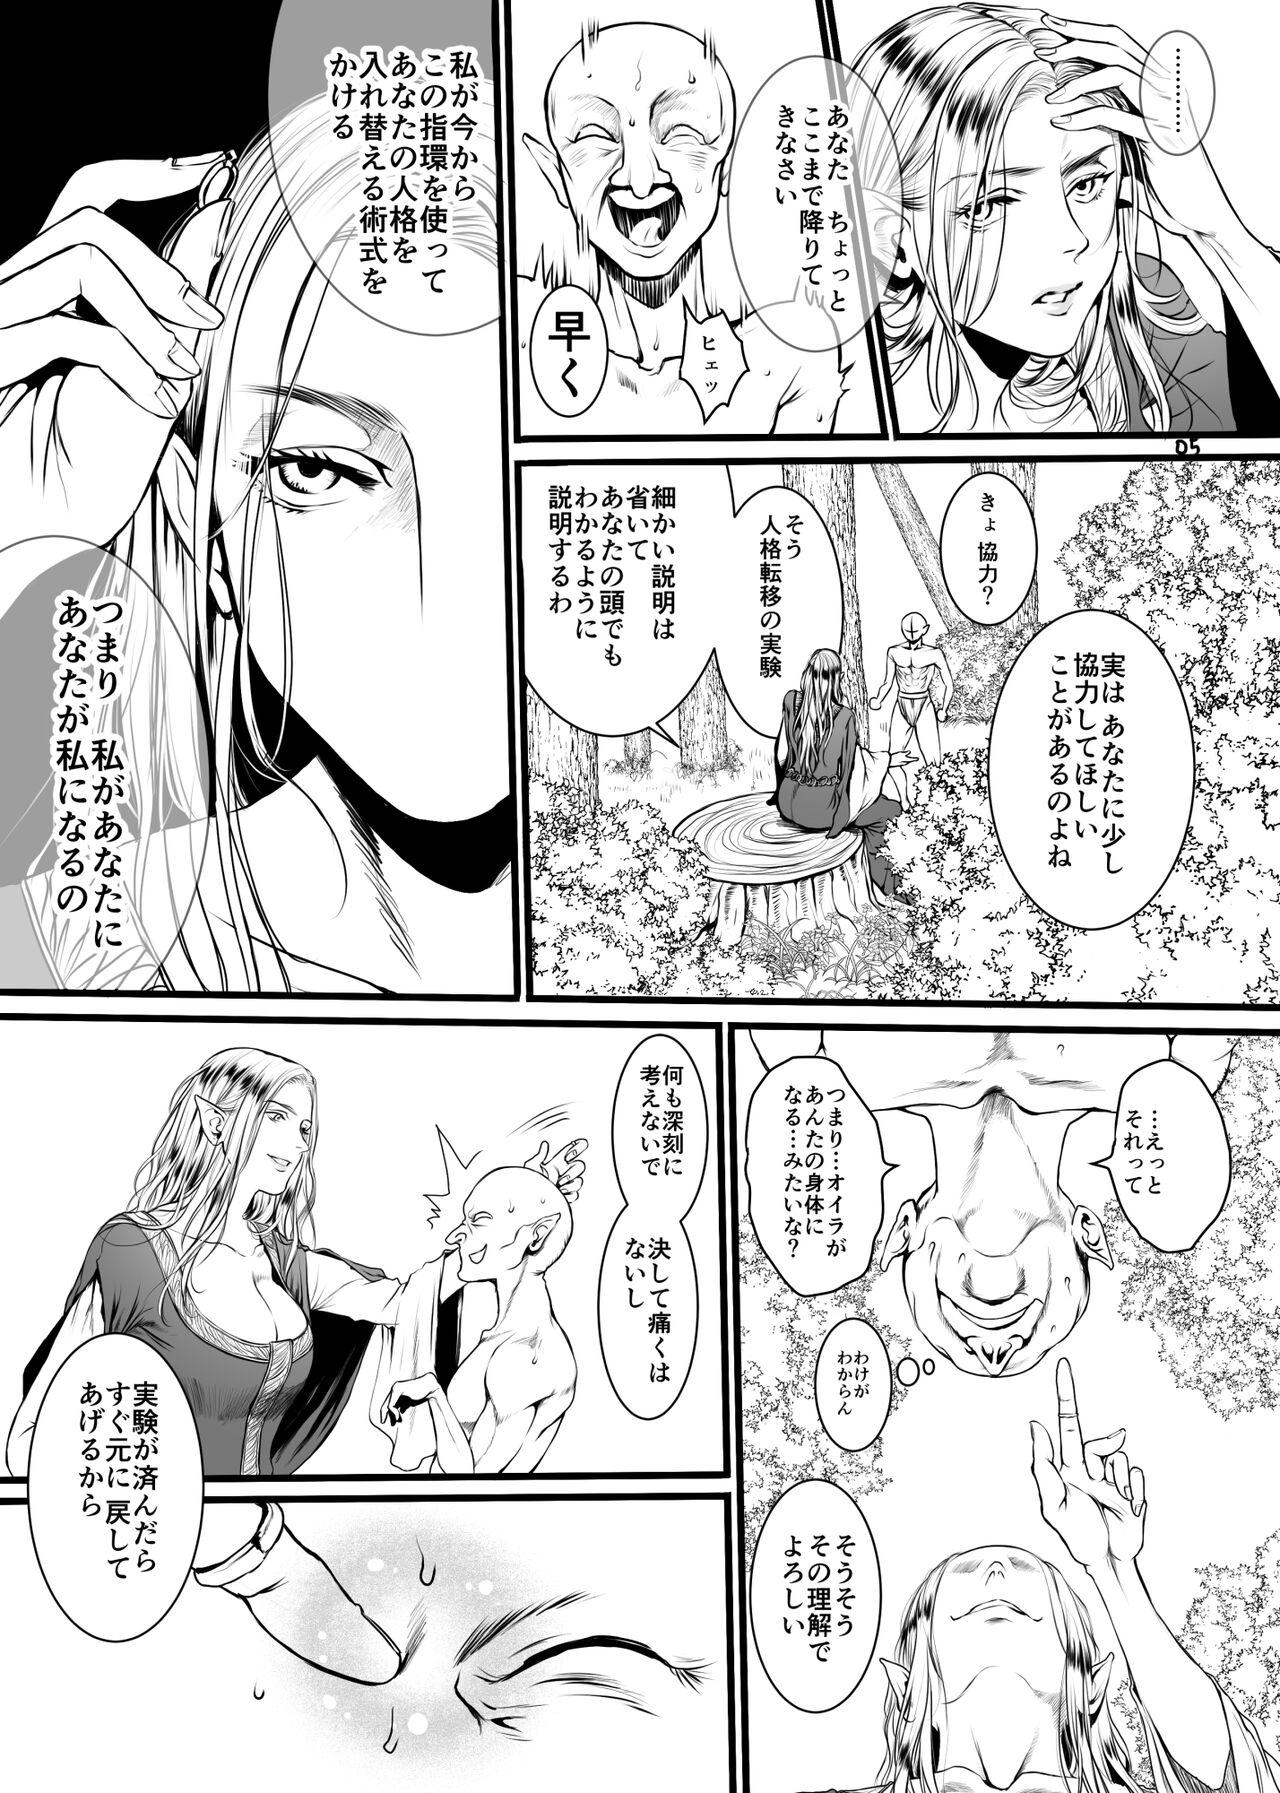 Hiddencam Kansei wo Akiramta TSF Manga Perfect Girl Porn - Page 2